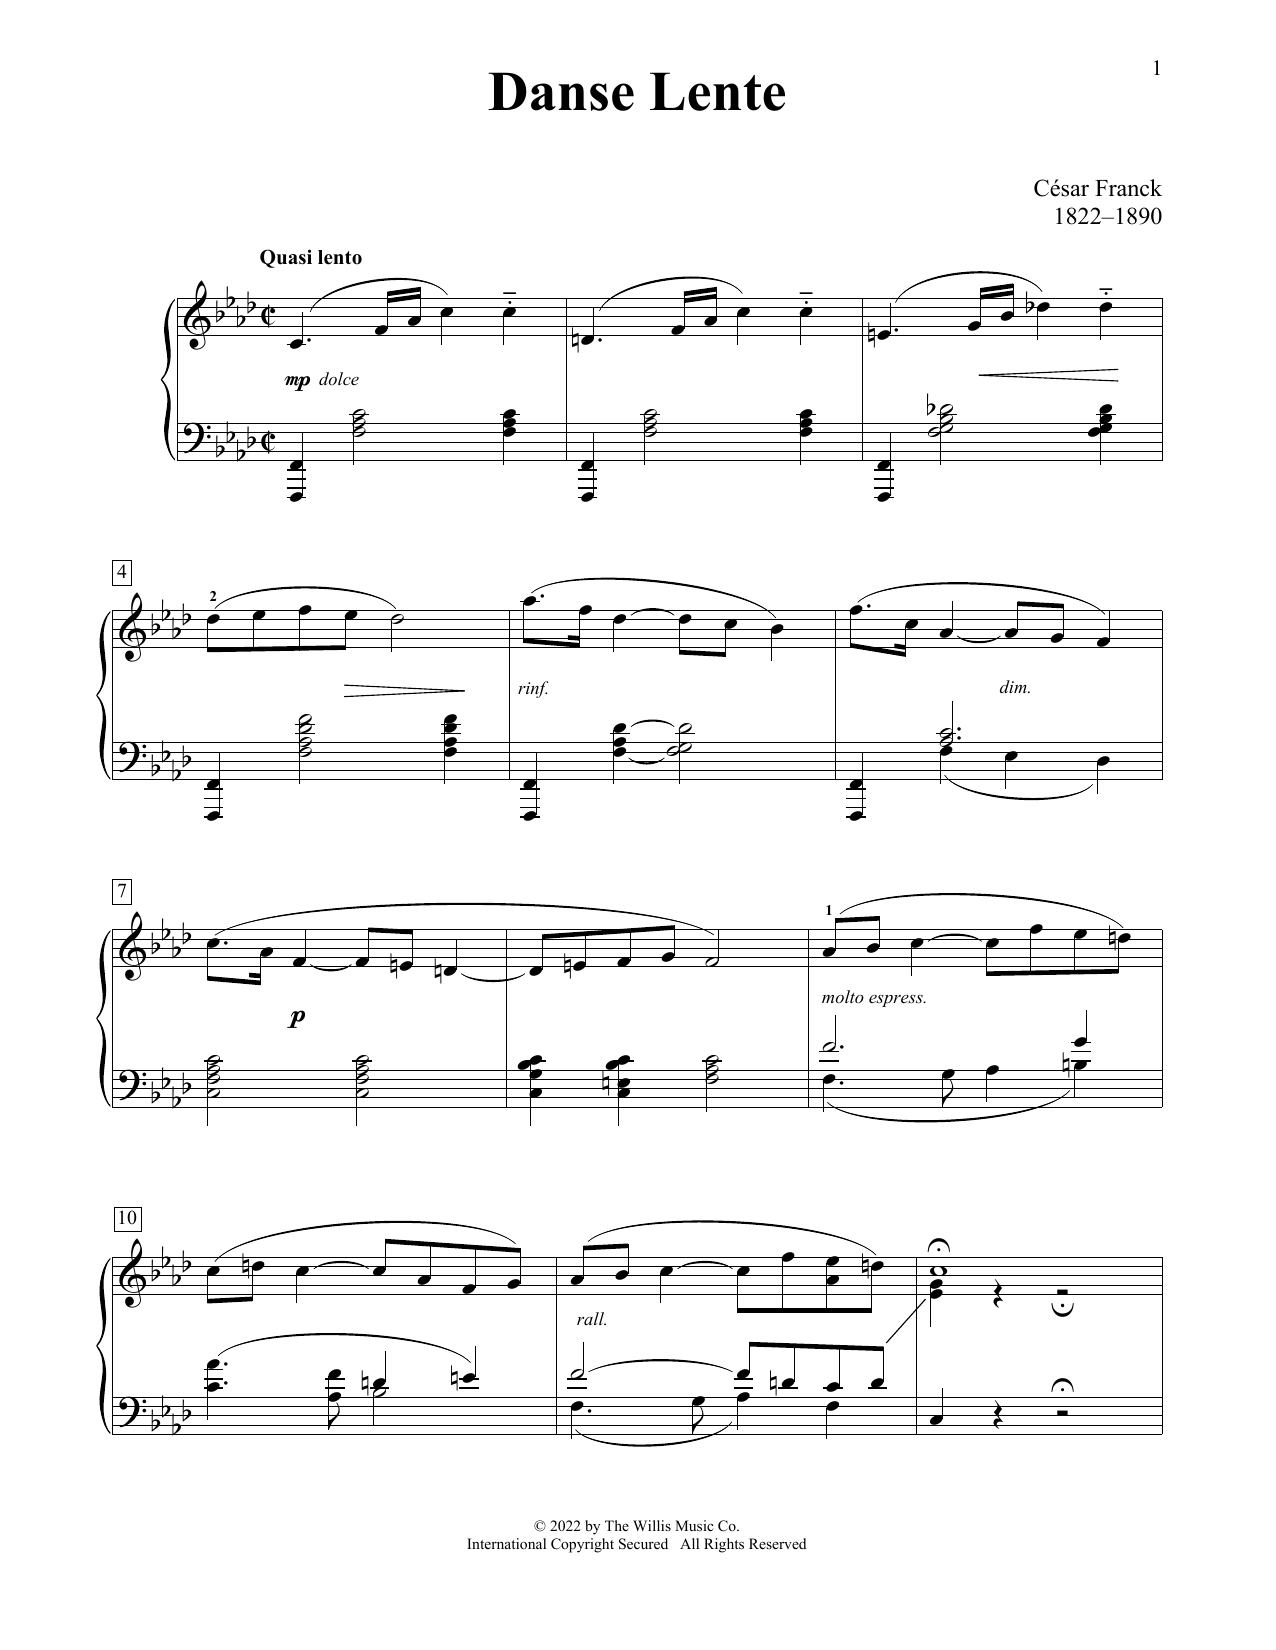 Cesar Franck Danse Lente sheet music notes printable PDF score